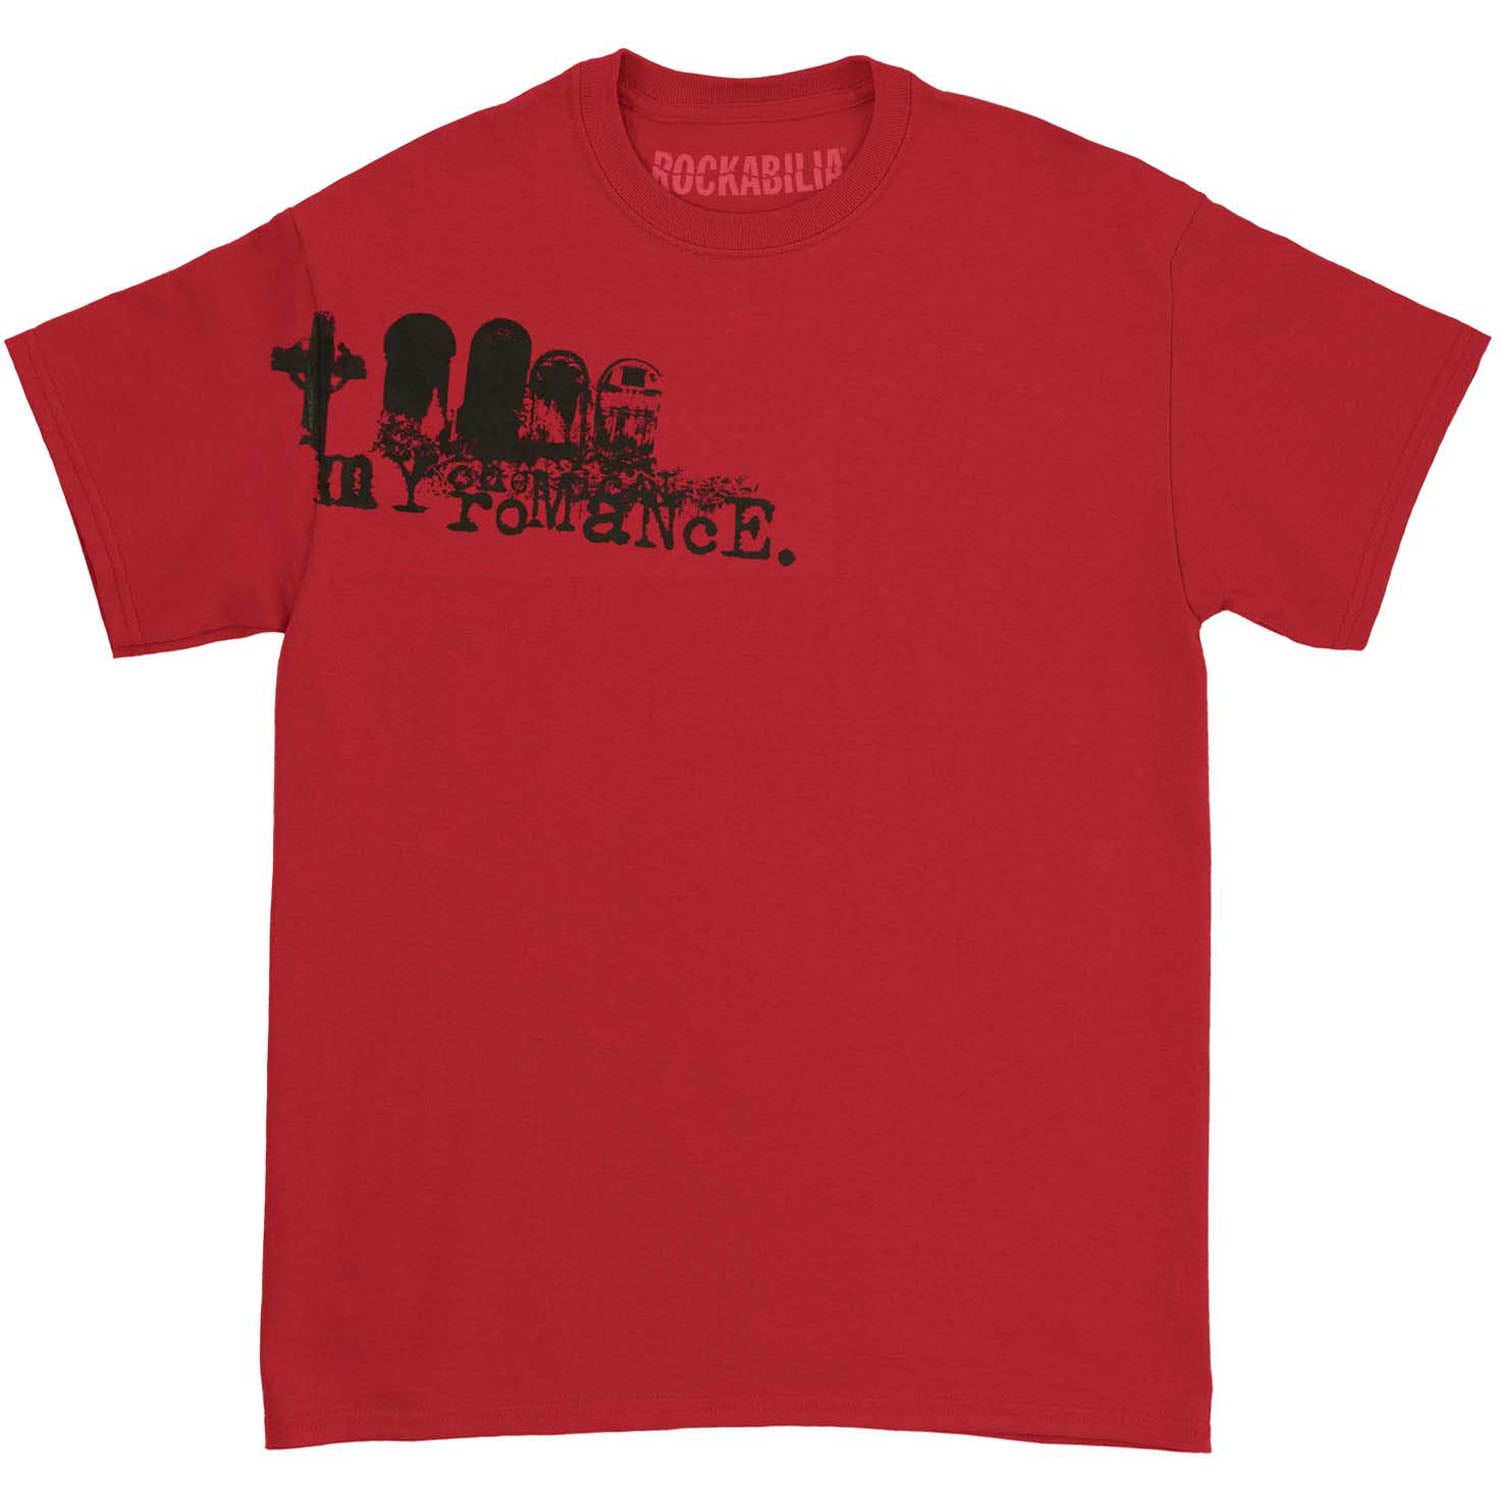 My Chemical Romance Men's Tombstones T-shirt X-Large Red - Walmart.com